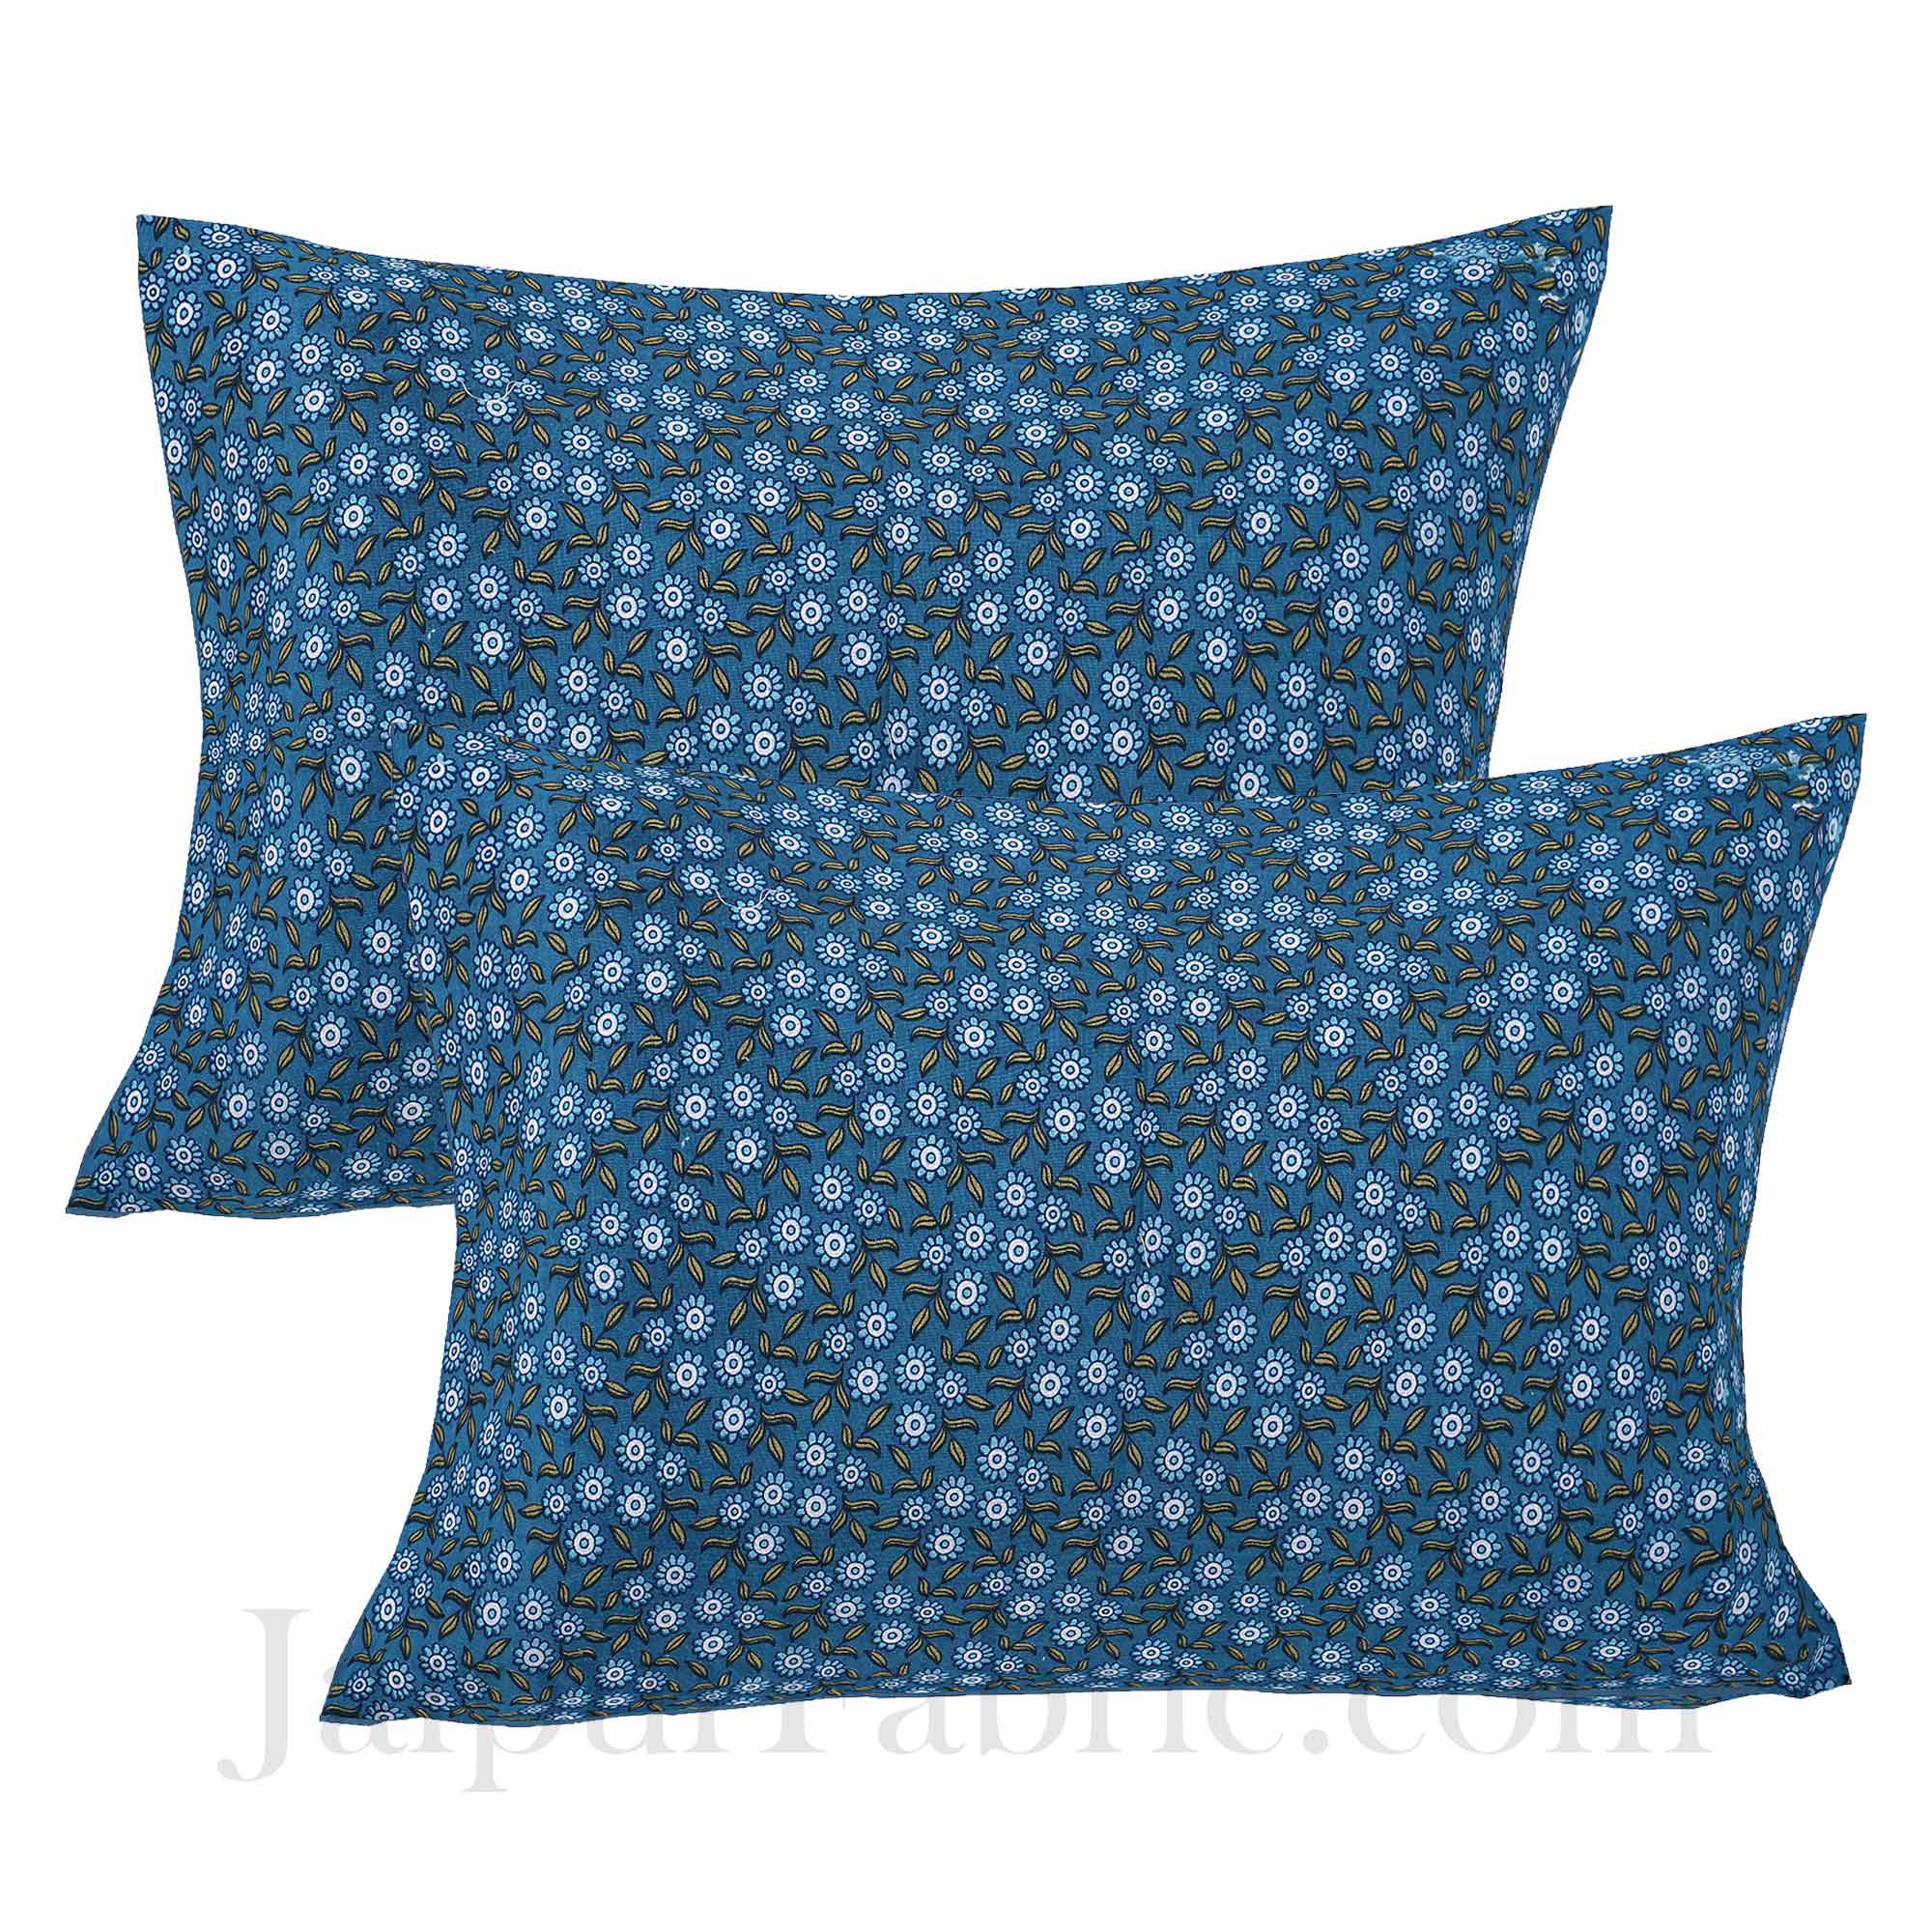 Jaipuri Jharokha Blue Double Bedsheet